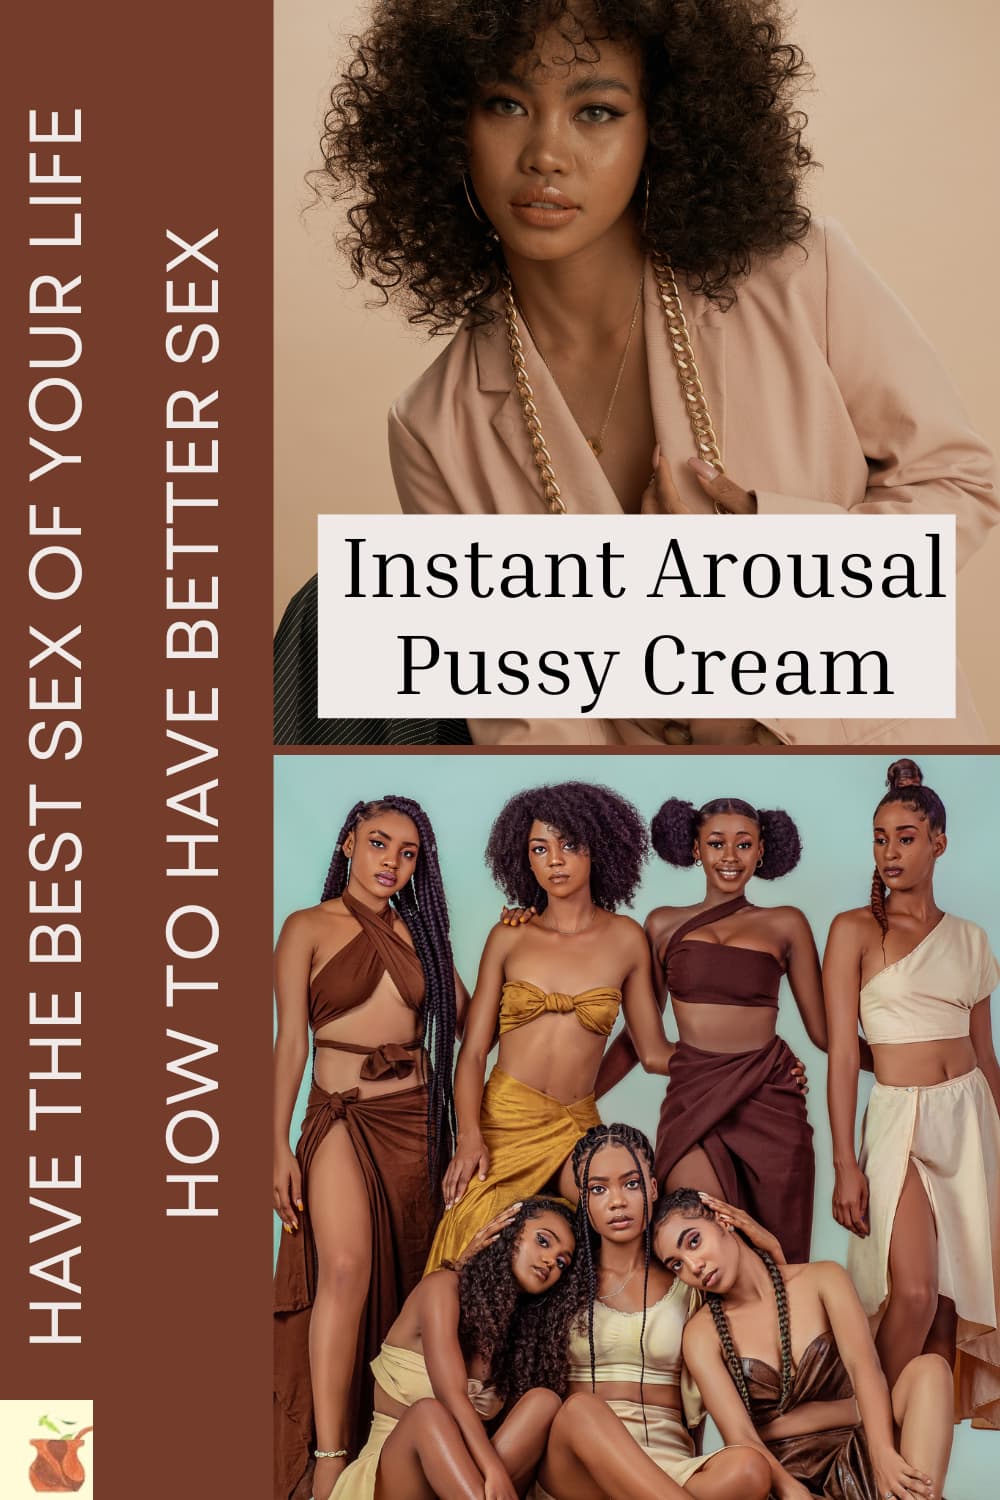 Pussy arousal Cream